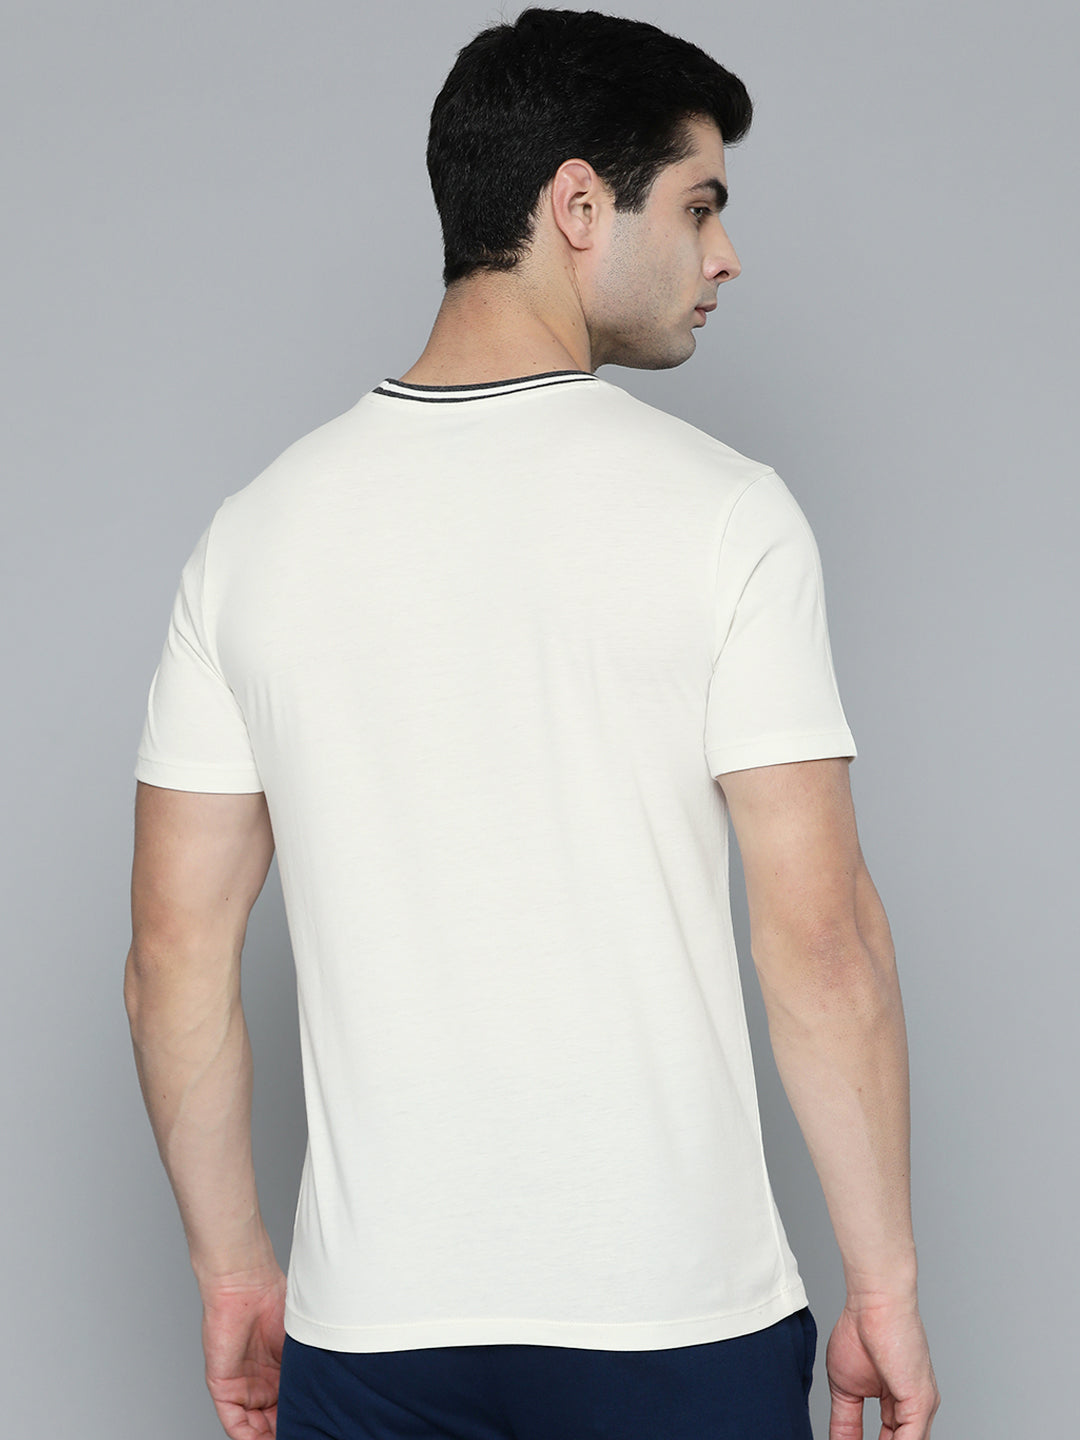 Alcis Men White Brand Logo T-shirt